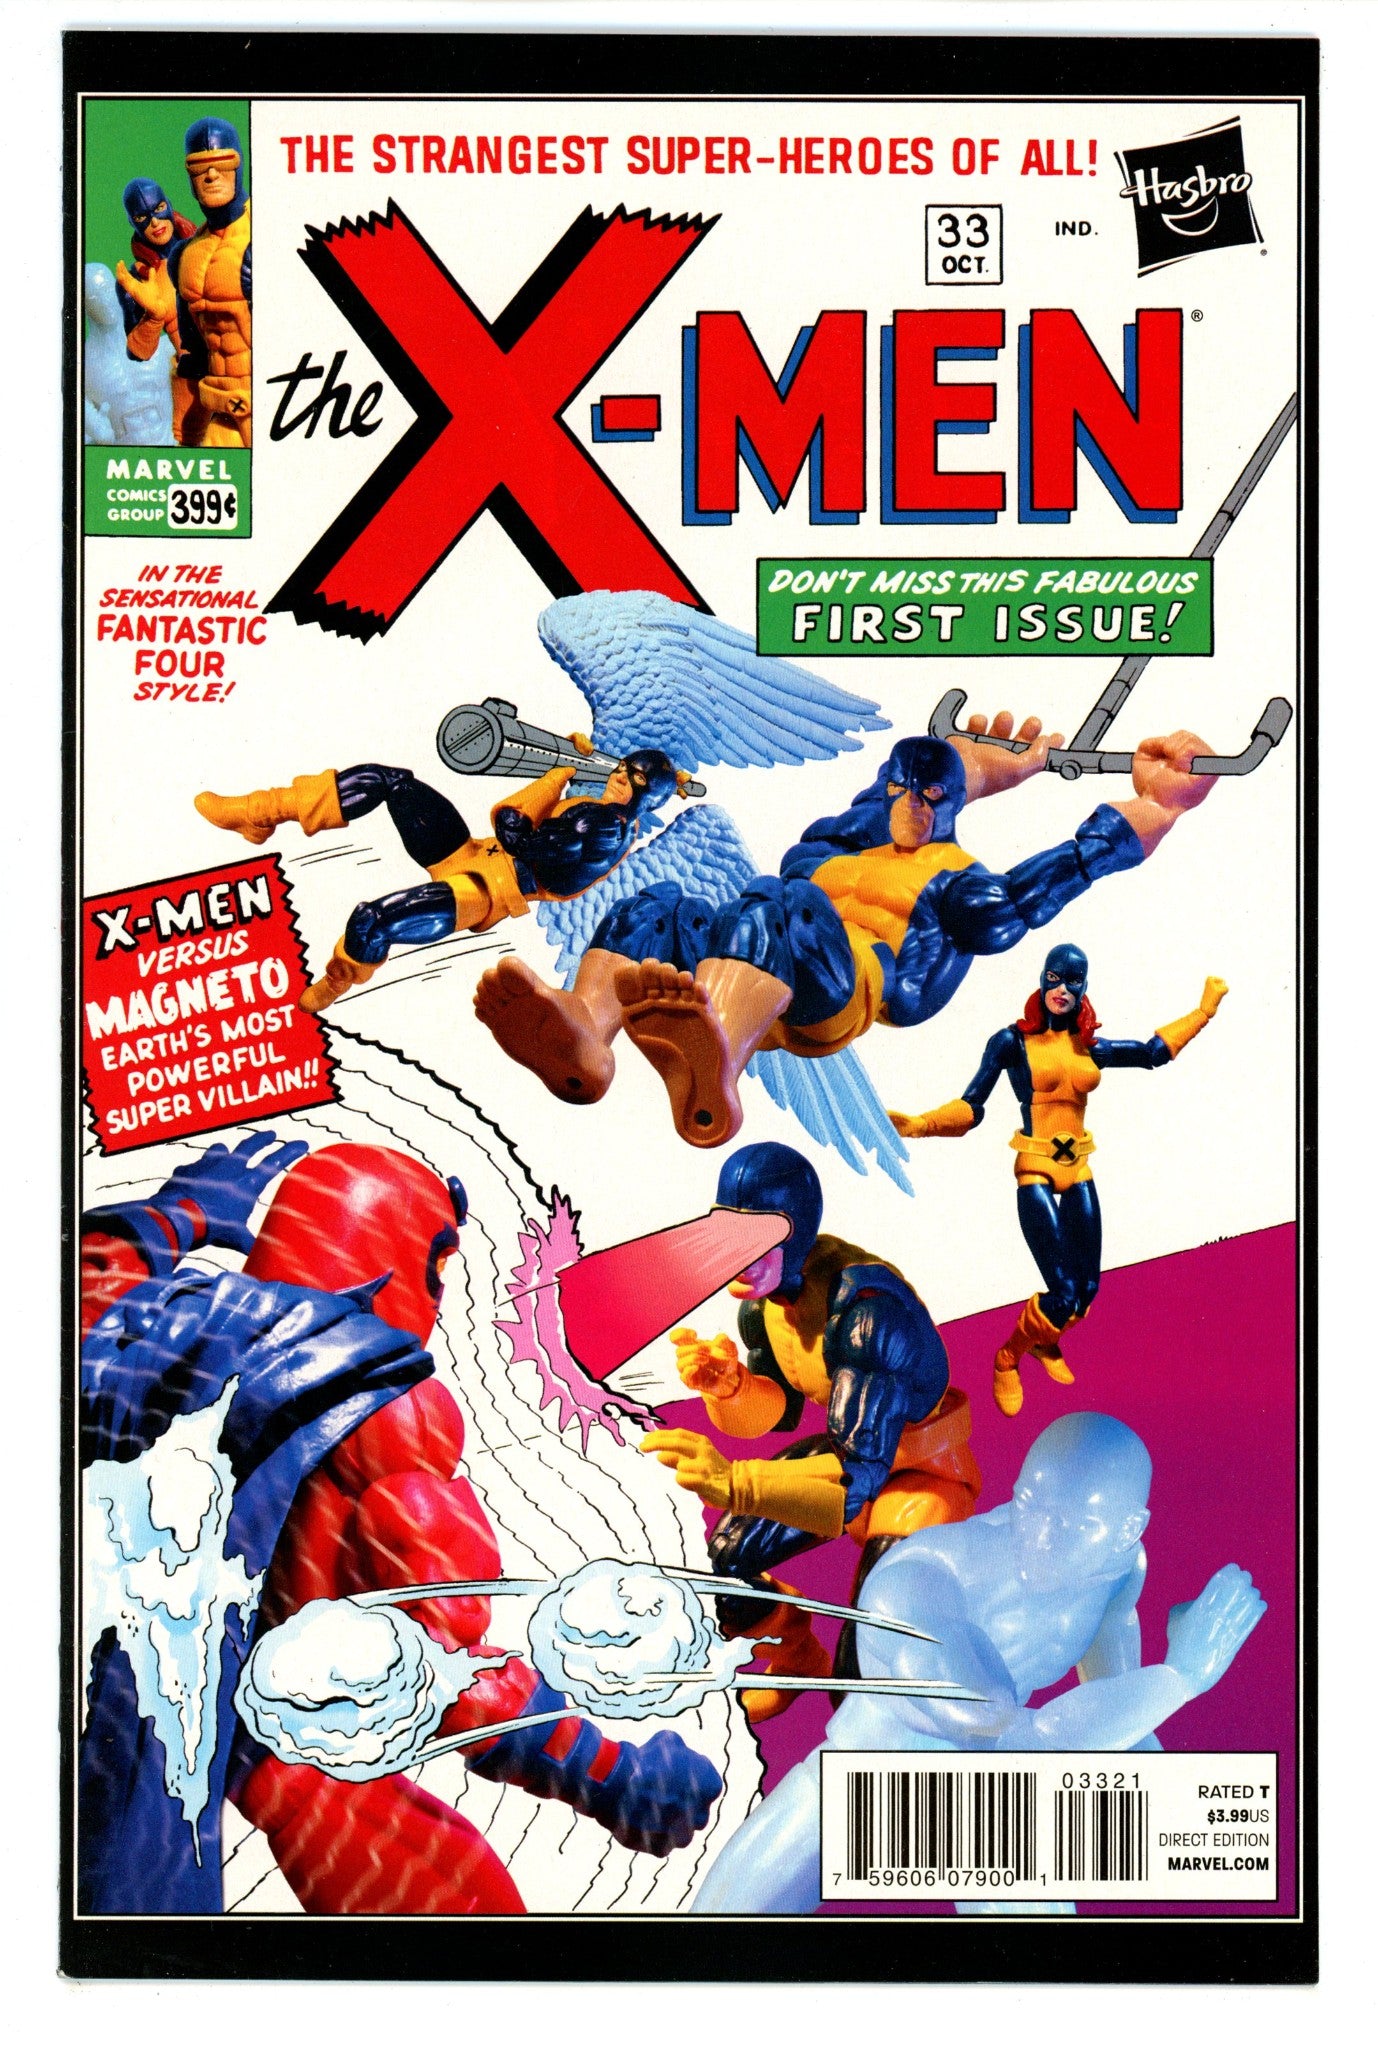 All-New X-Men Vol 1 33 High Grade (2014) Hasbro Variant 